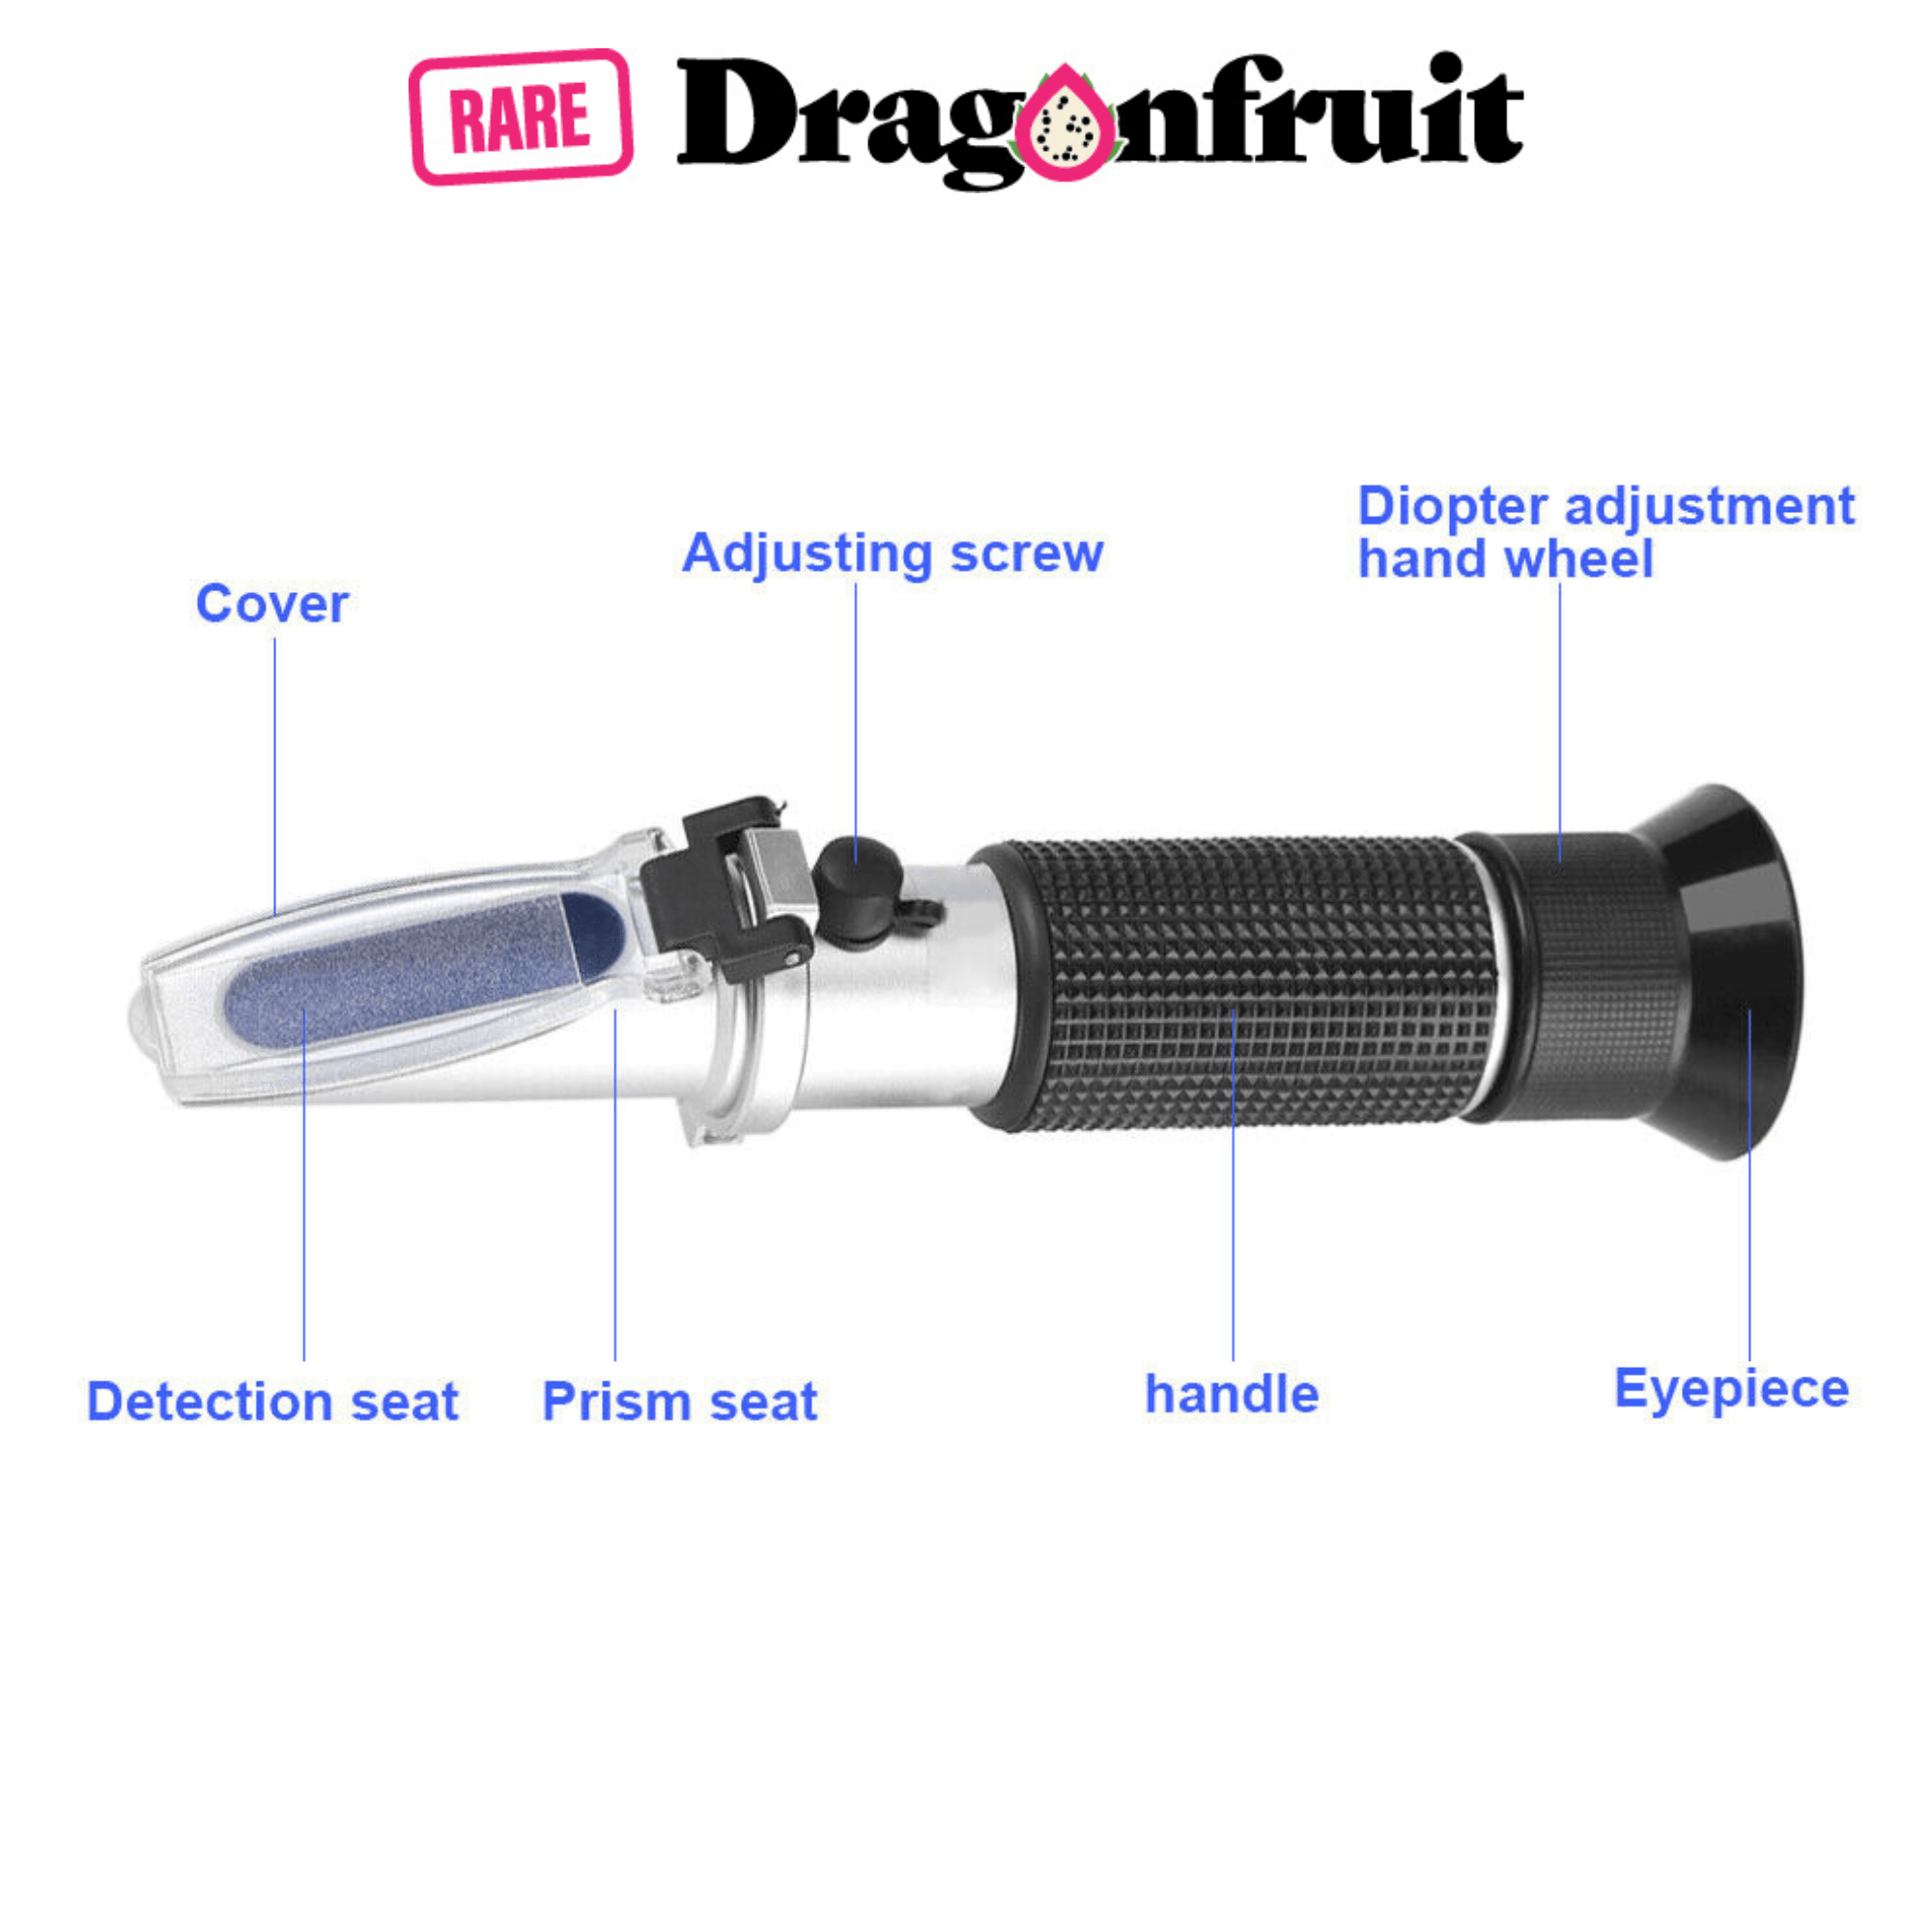 Brix refractometer- measure the sugar content of your dragon fruit. - Rare Dragon Fruit